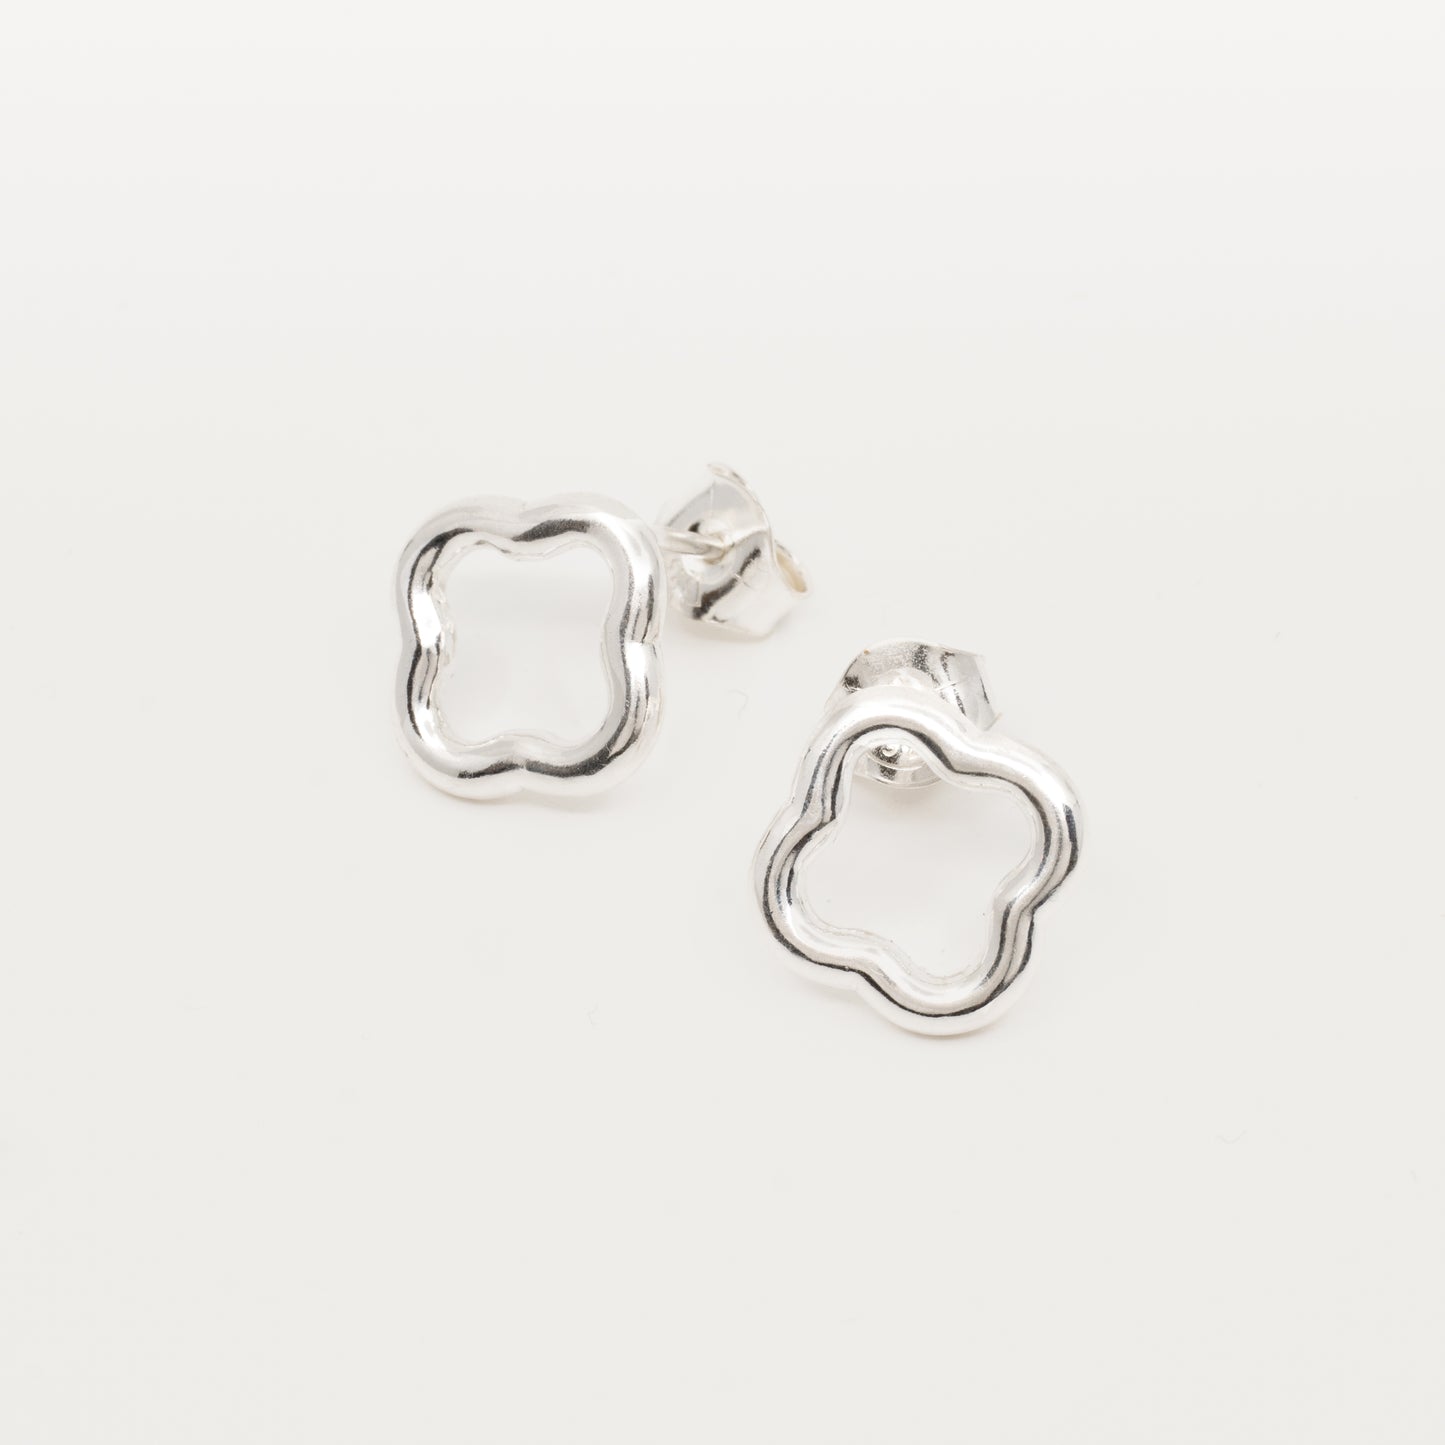 Creo Plain - Silver earrings